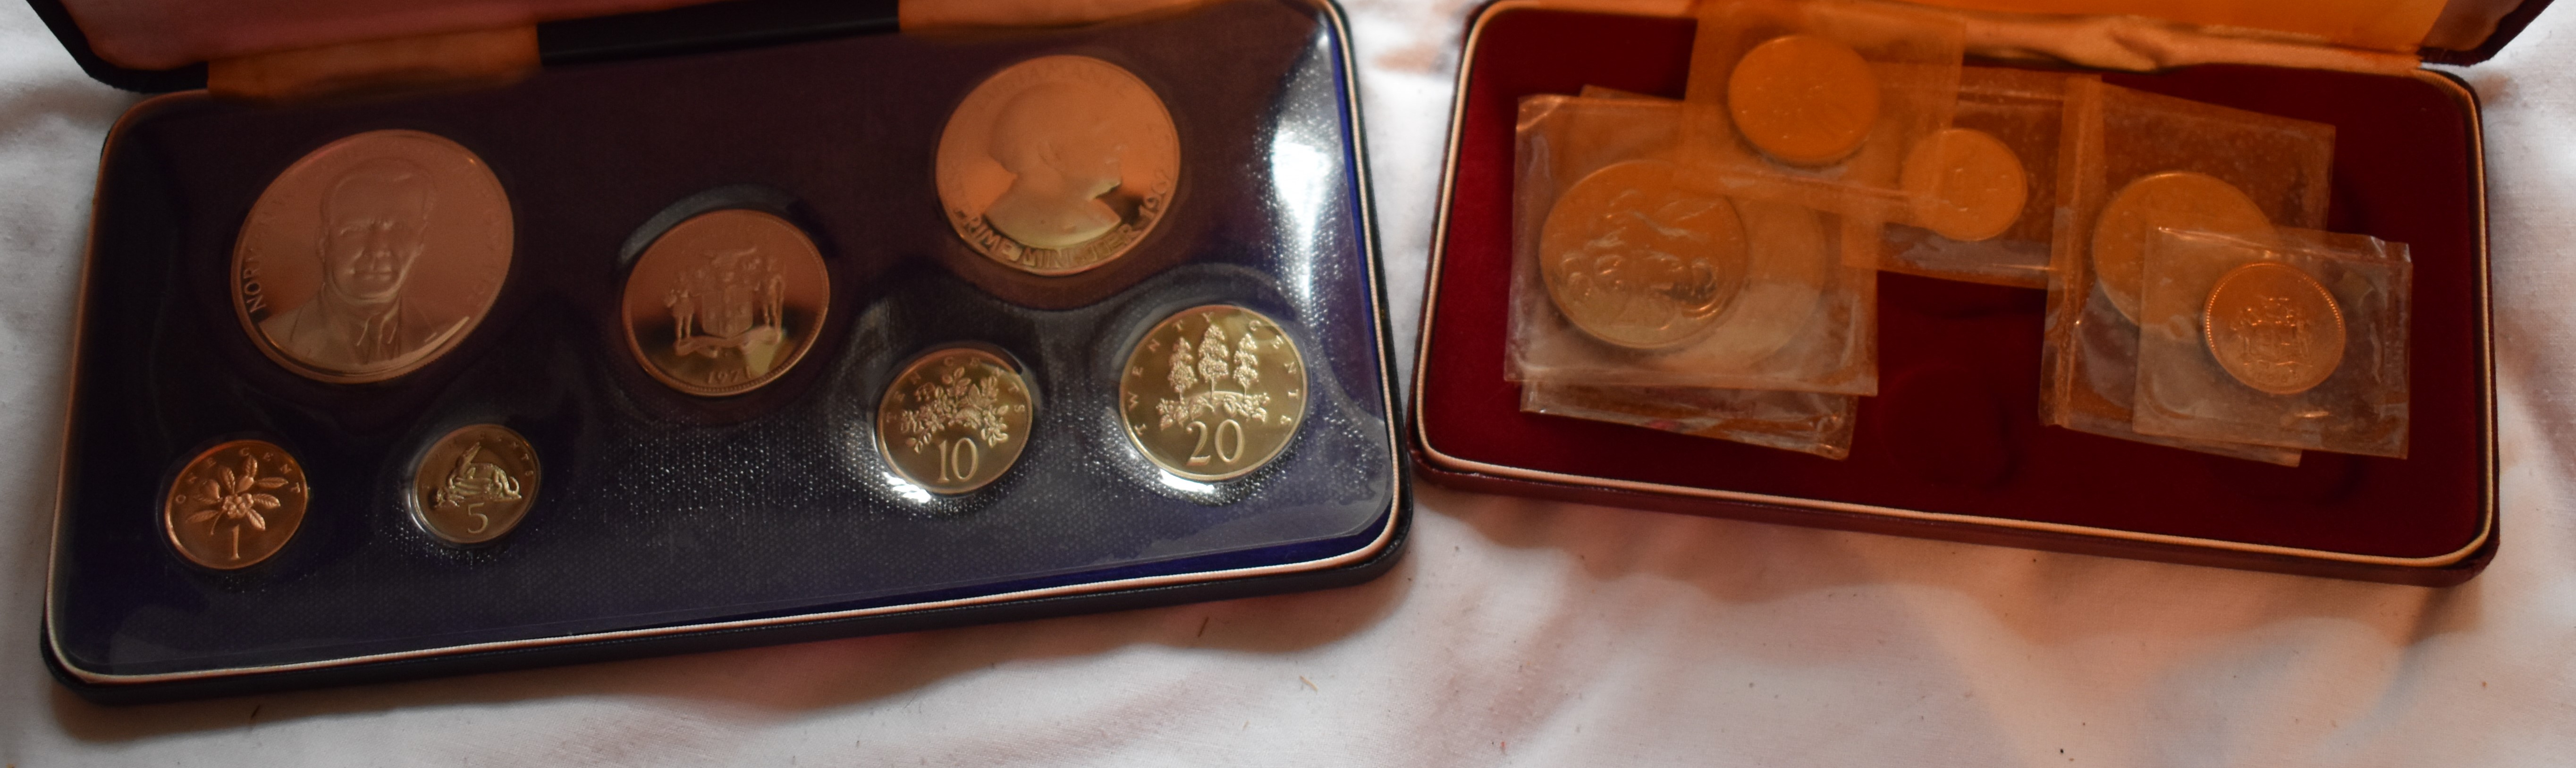 Jamaica 1969 Royal Mint Proof Set (6) and 1971 Proof Set, Franklin Mint (7) both cased (2).